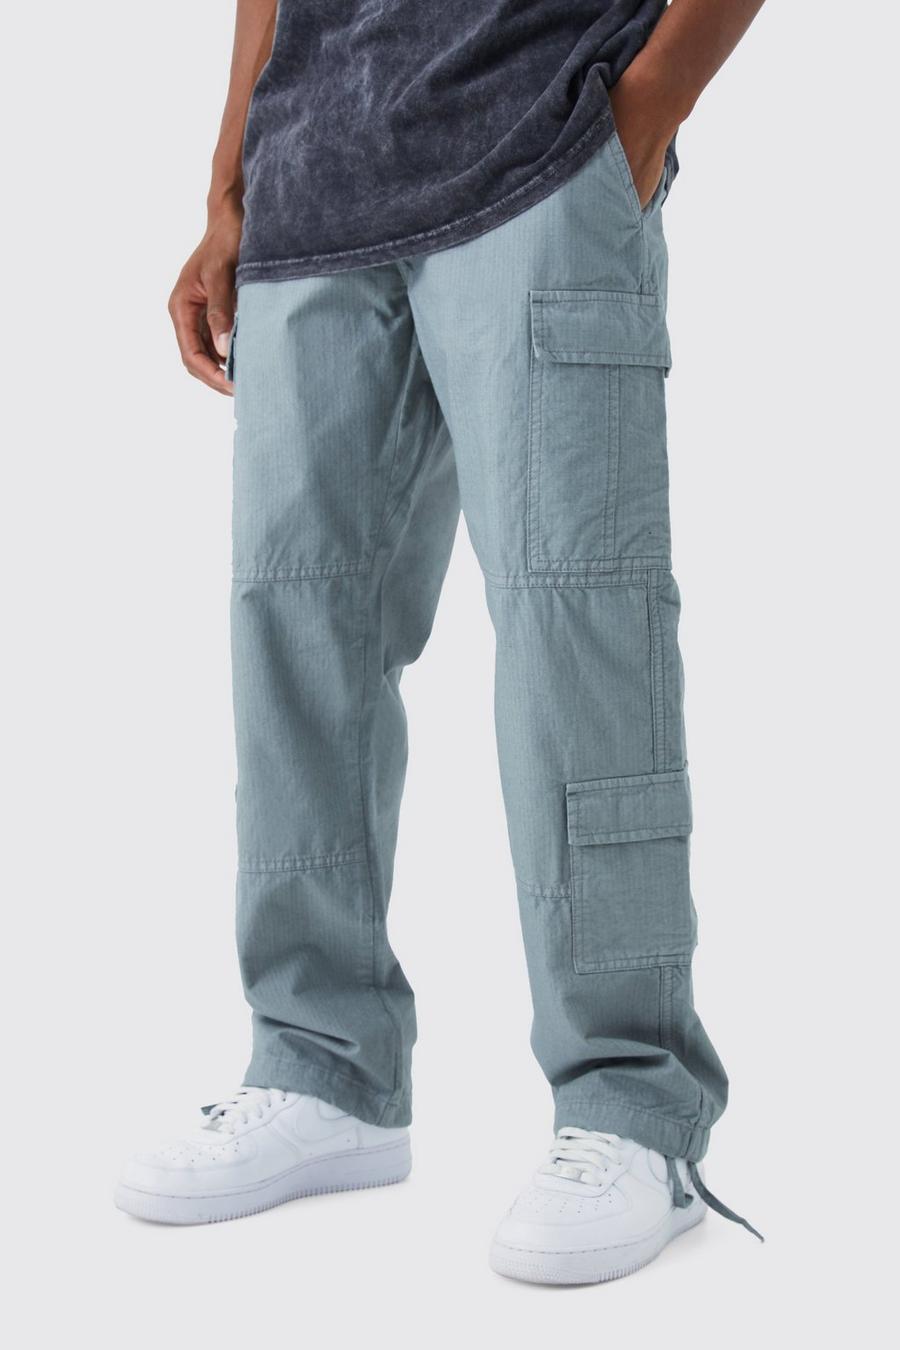 Pantalon cargo ample à poches multiples, Slate